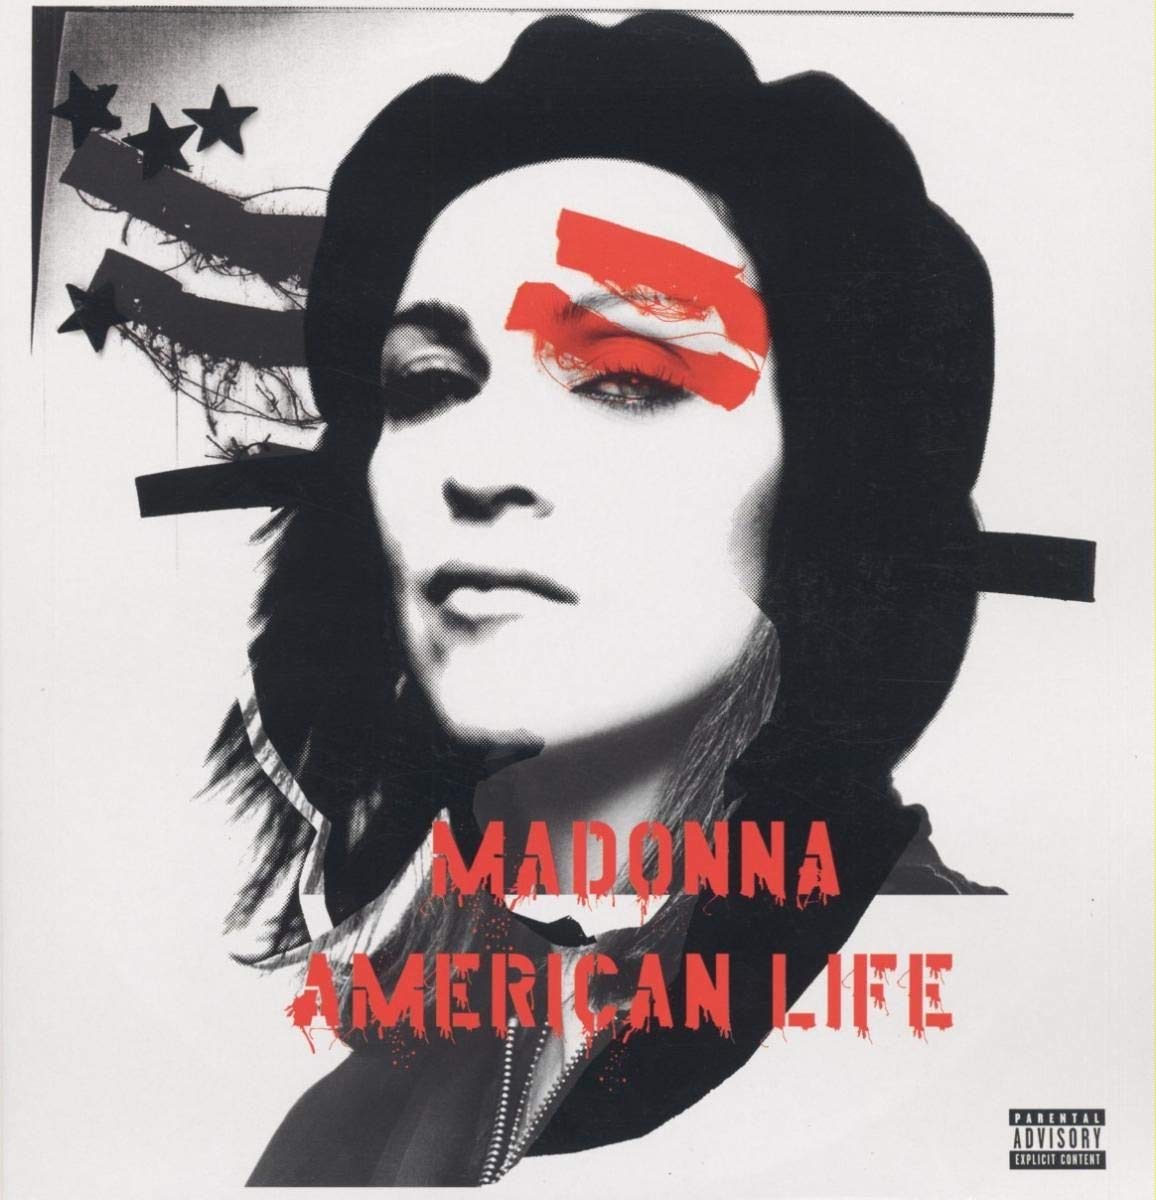 Madonna "American life" LP